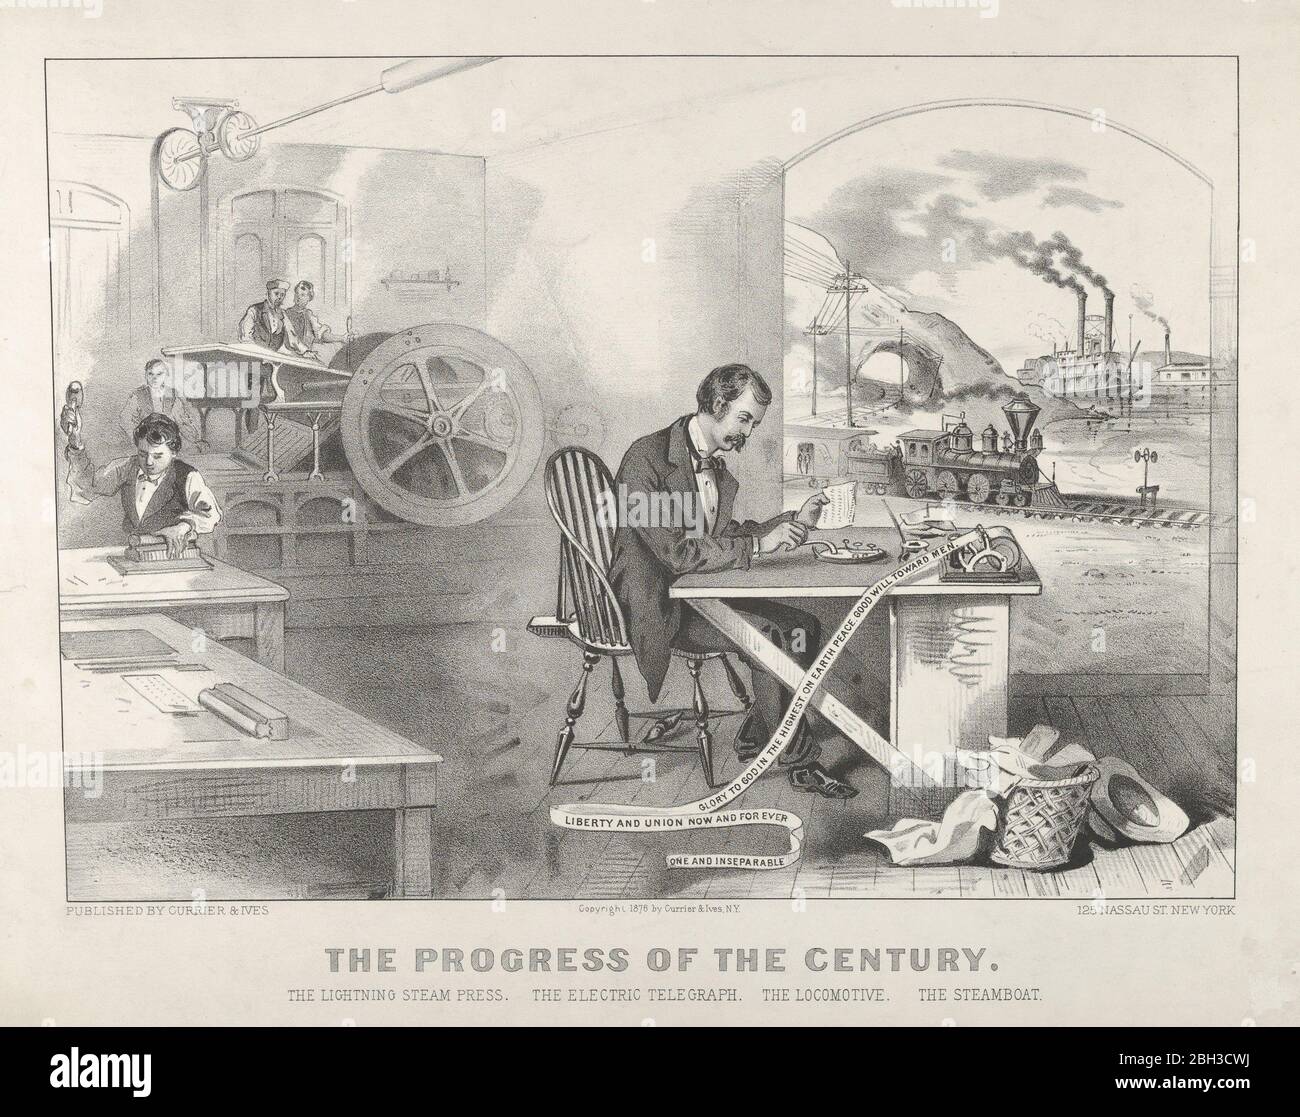 https://c8.alamy.com/comp/2BH3CWJ/the-progress-of-the-century-the-lightning-steam-press-the-electric-telegraph-the-locomotive-the-steamboat-1876-2BH3CWJ.jpg